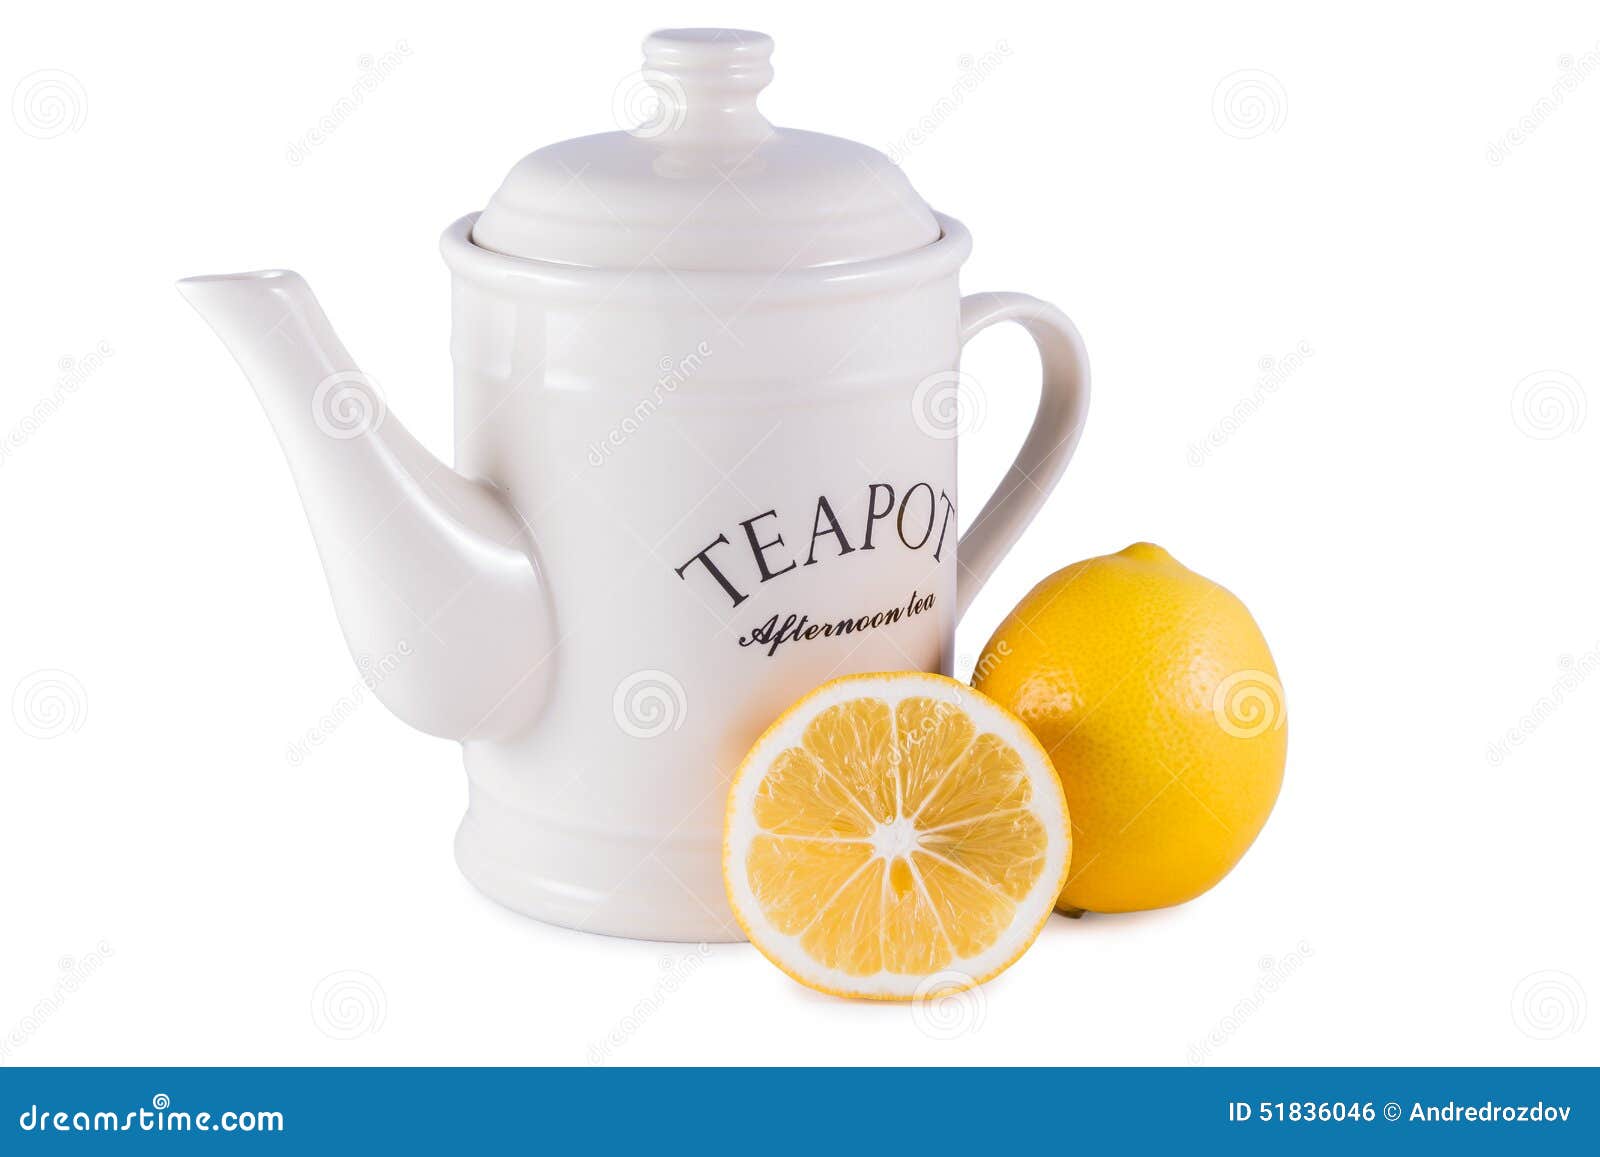 teapot and lemon